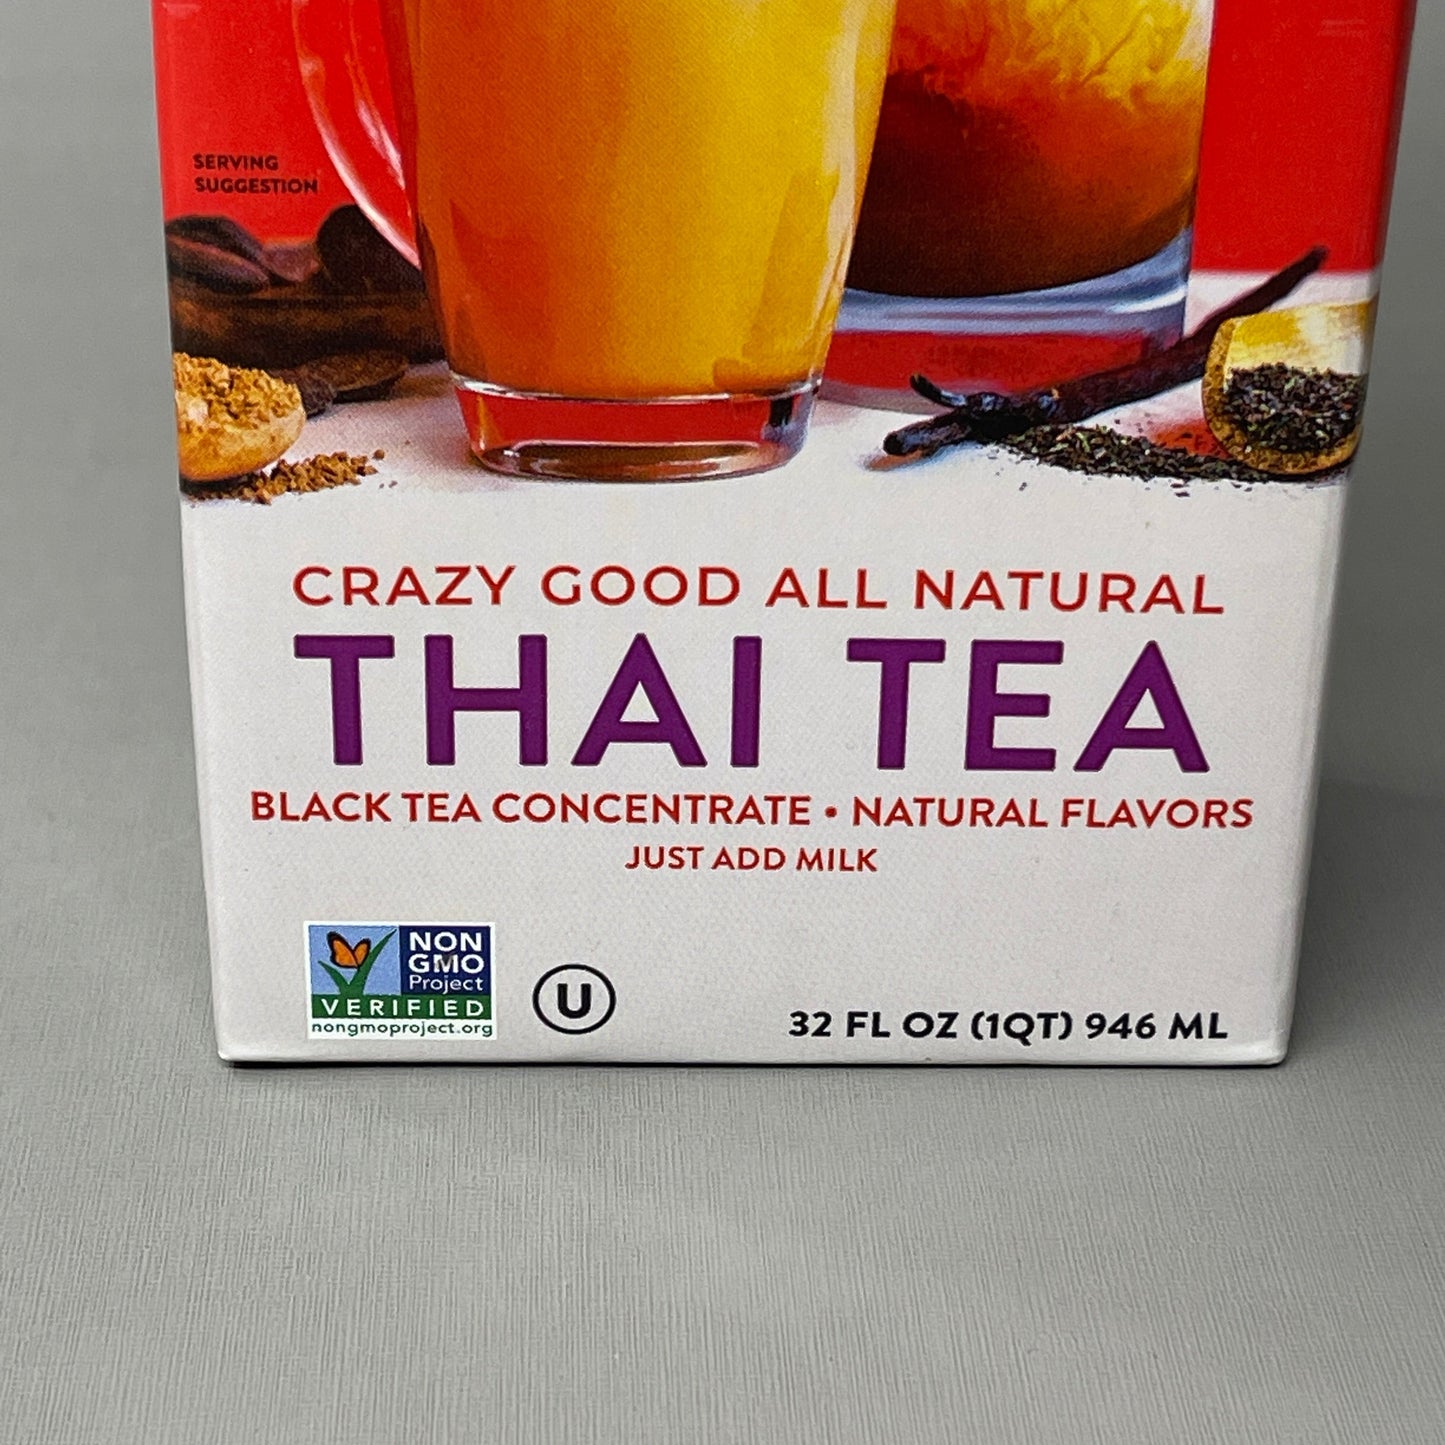 ZA@ THAIWALA 6 Pack Of All Natural Thai Tea Black Tea Concentrate 32 FL OZ 10/23 I